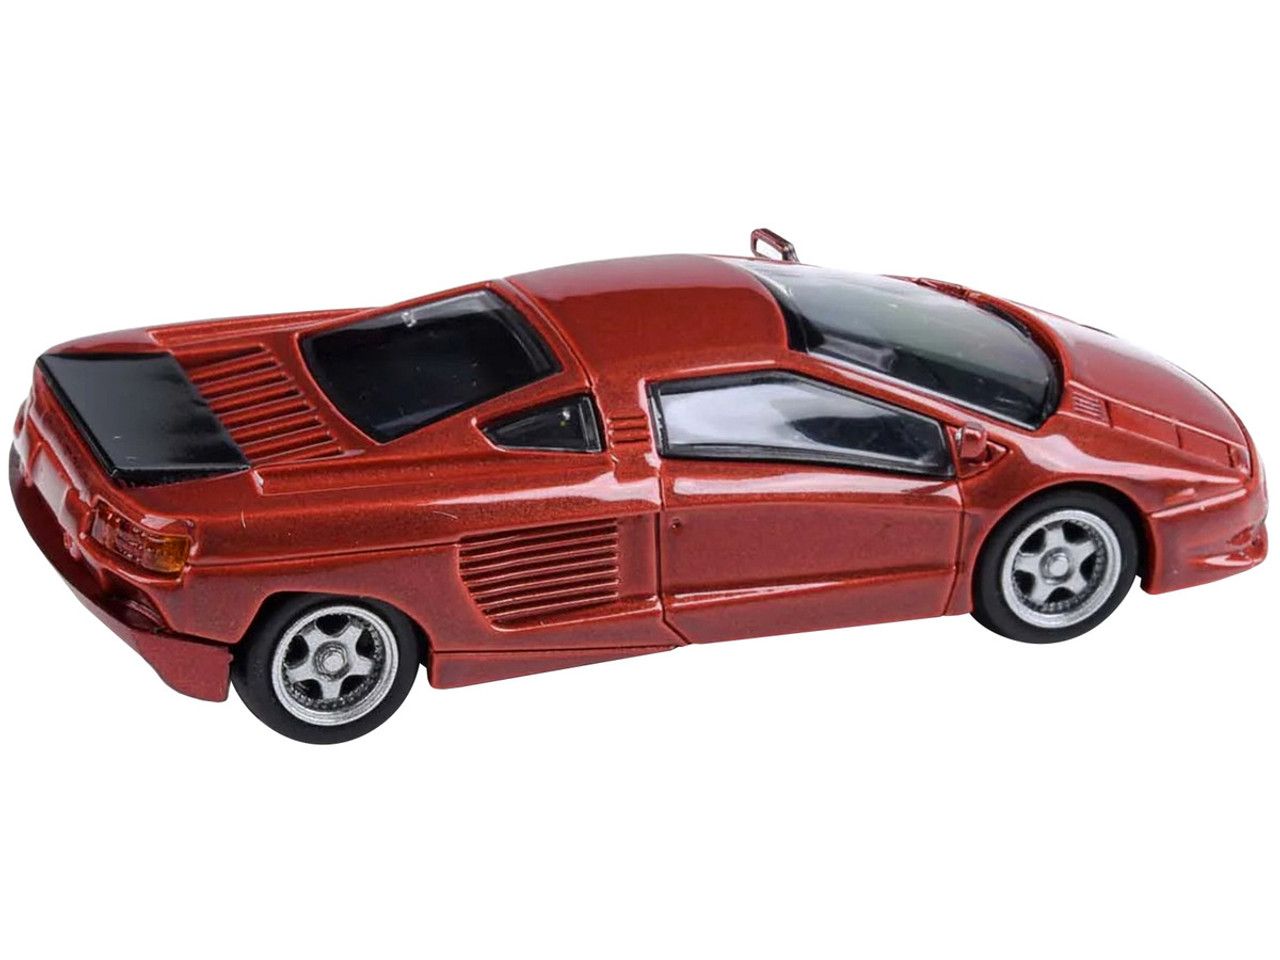 1/64 Paragon 1991 Cizeta V16T Rosso Diablo Red Metallic Diecast Car Model